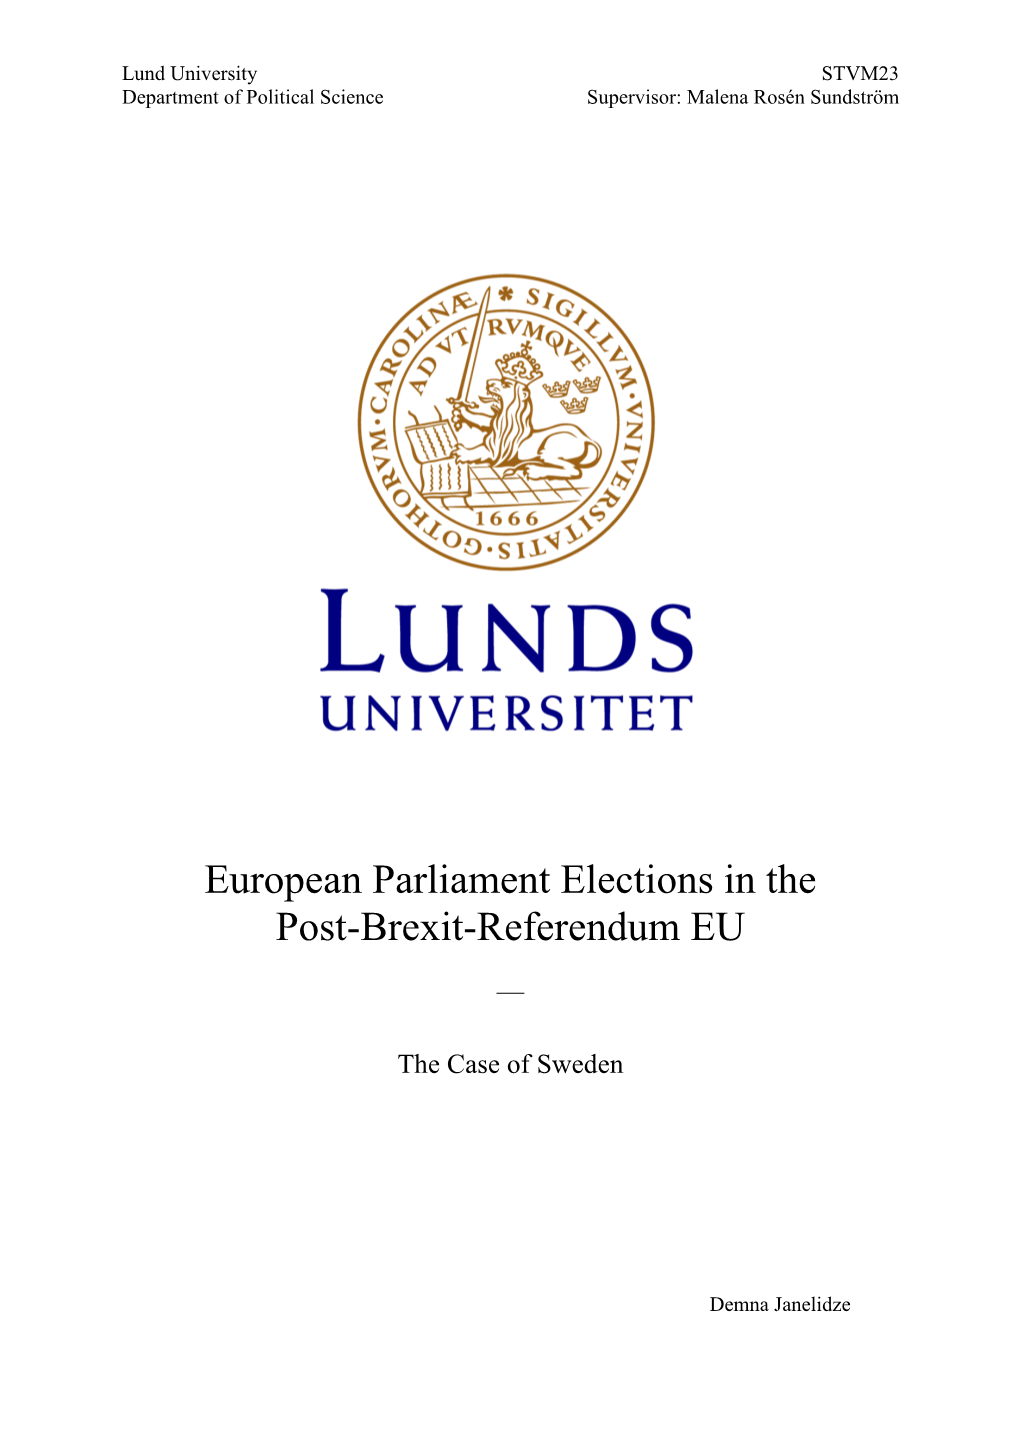 European Parliament Elections in the Post-Brexit-Referendum EU